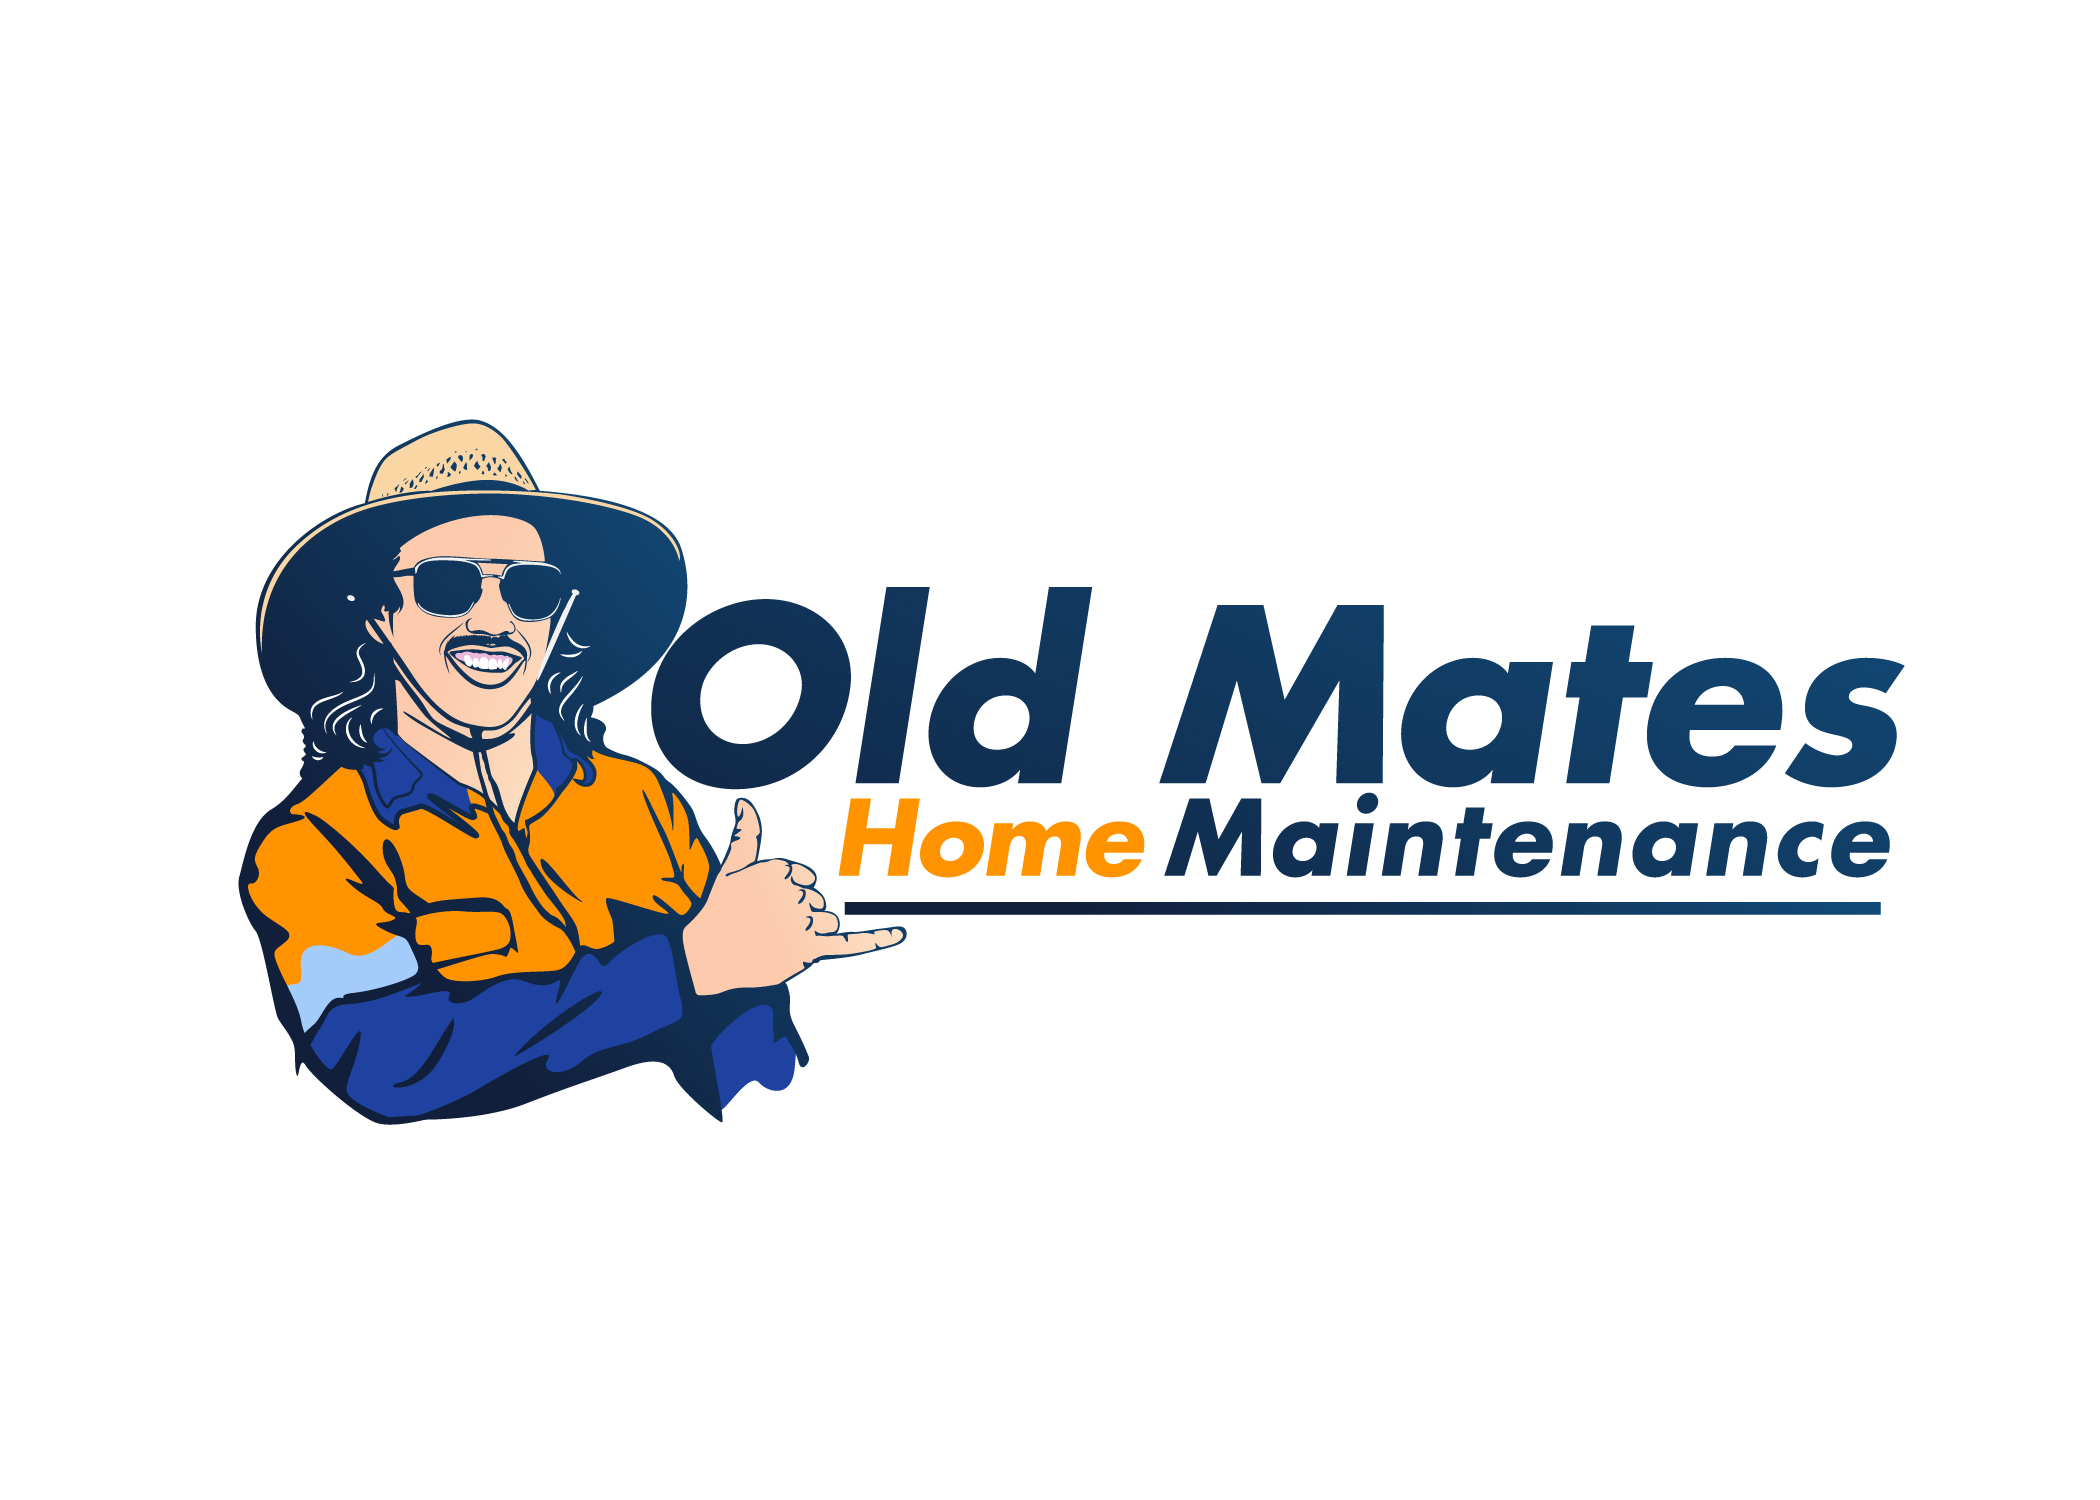 Oldmates Home Maintenance